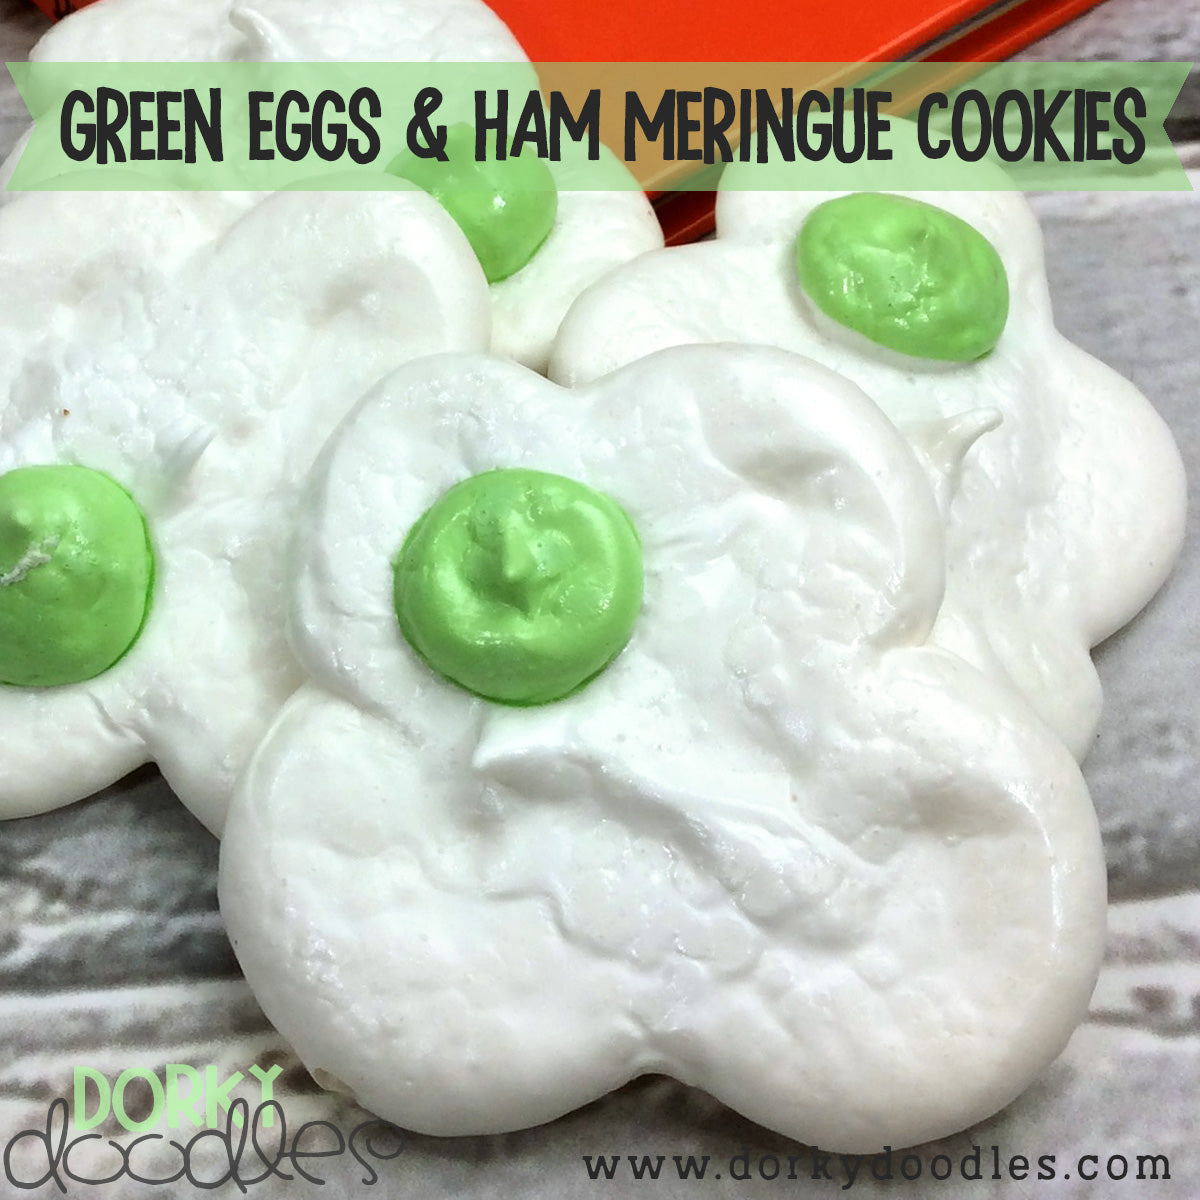 Dr Seuss Green Eggs and Ham Meringue Cookies